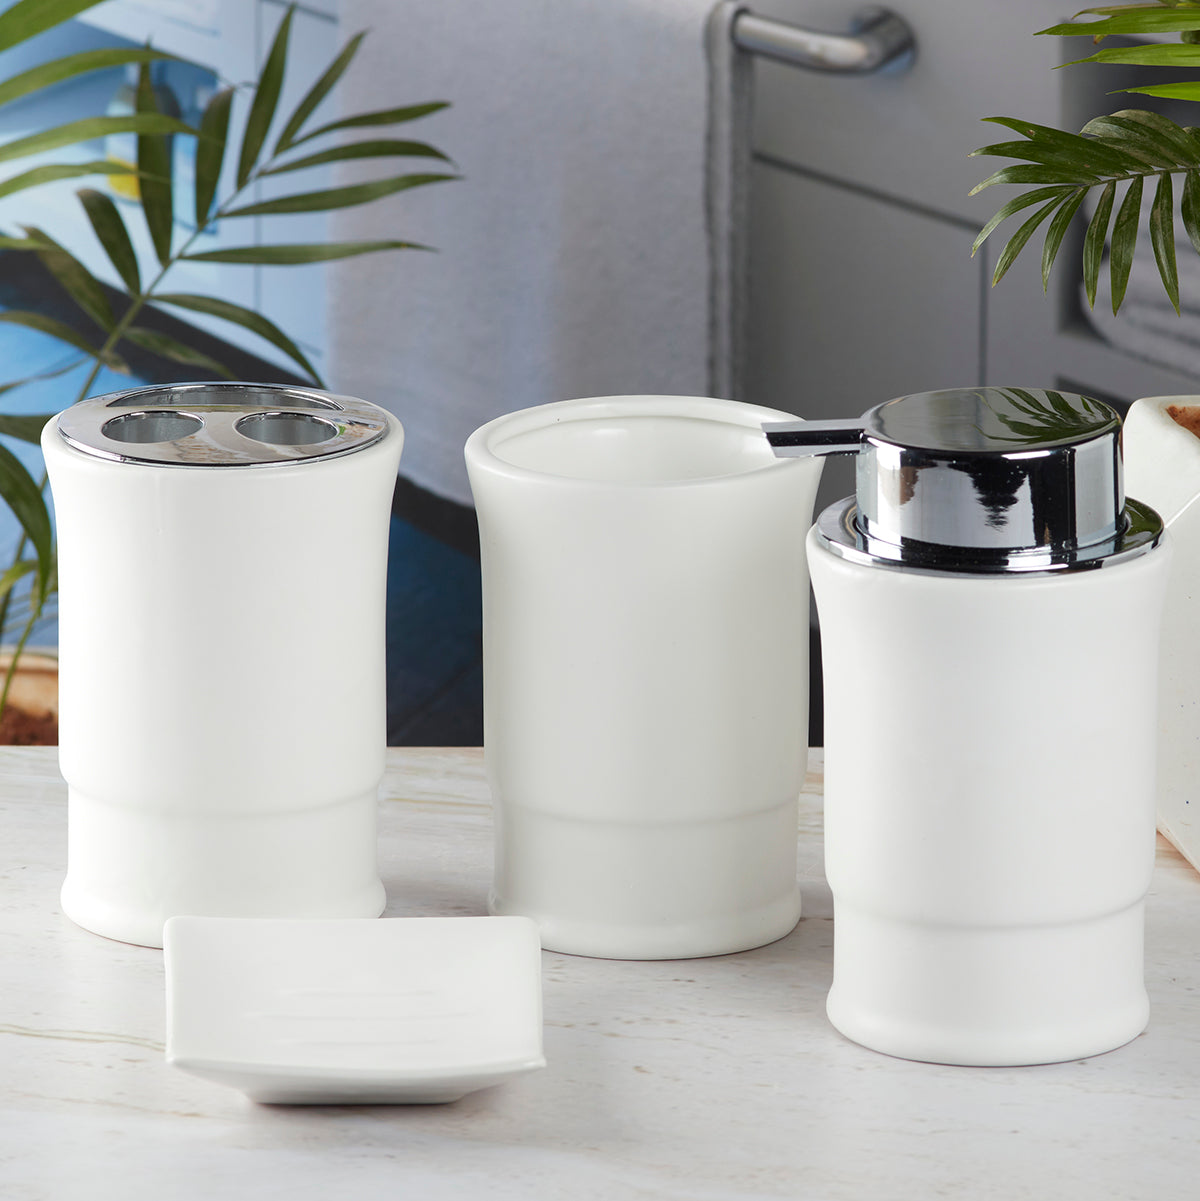 Ceramic Bathroom Accessories Set of 4 Bath Set with Soap Dispenser (8245)